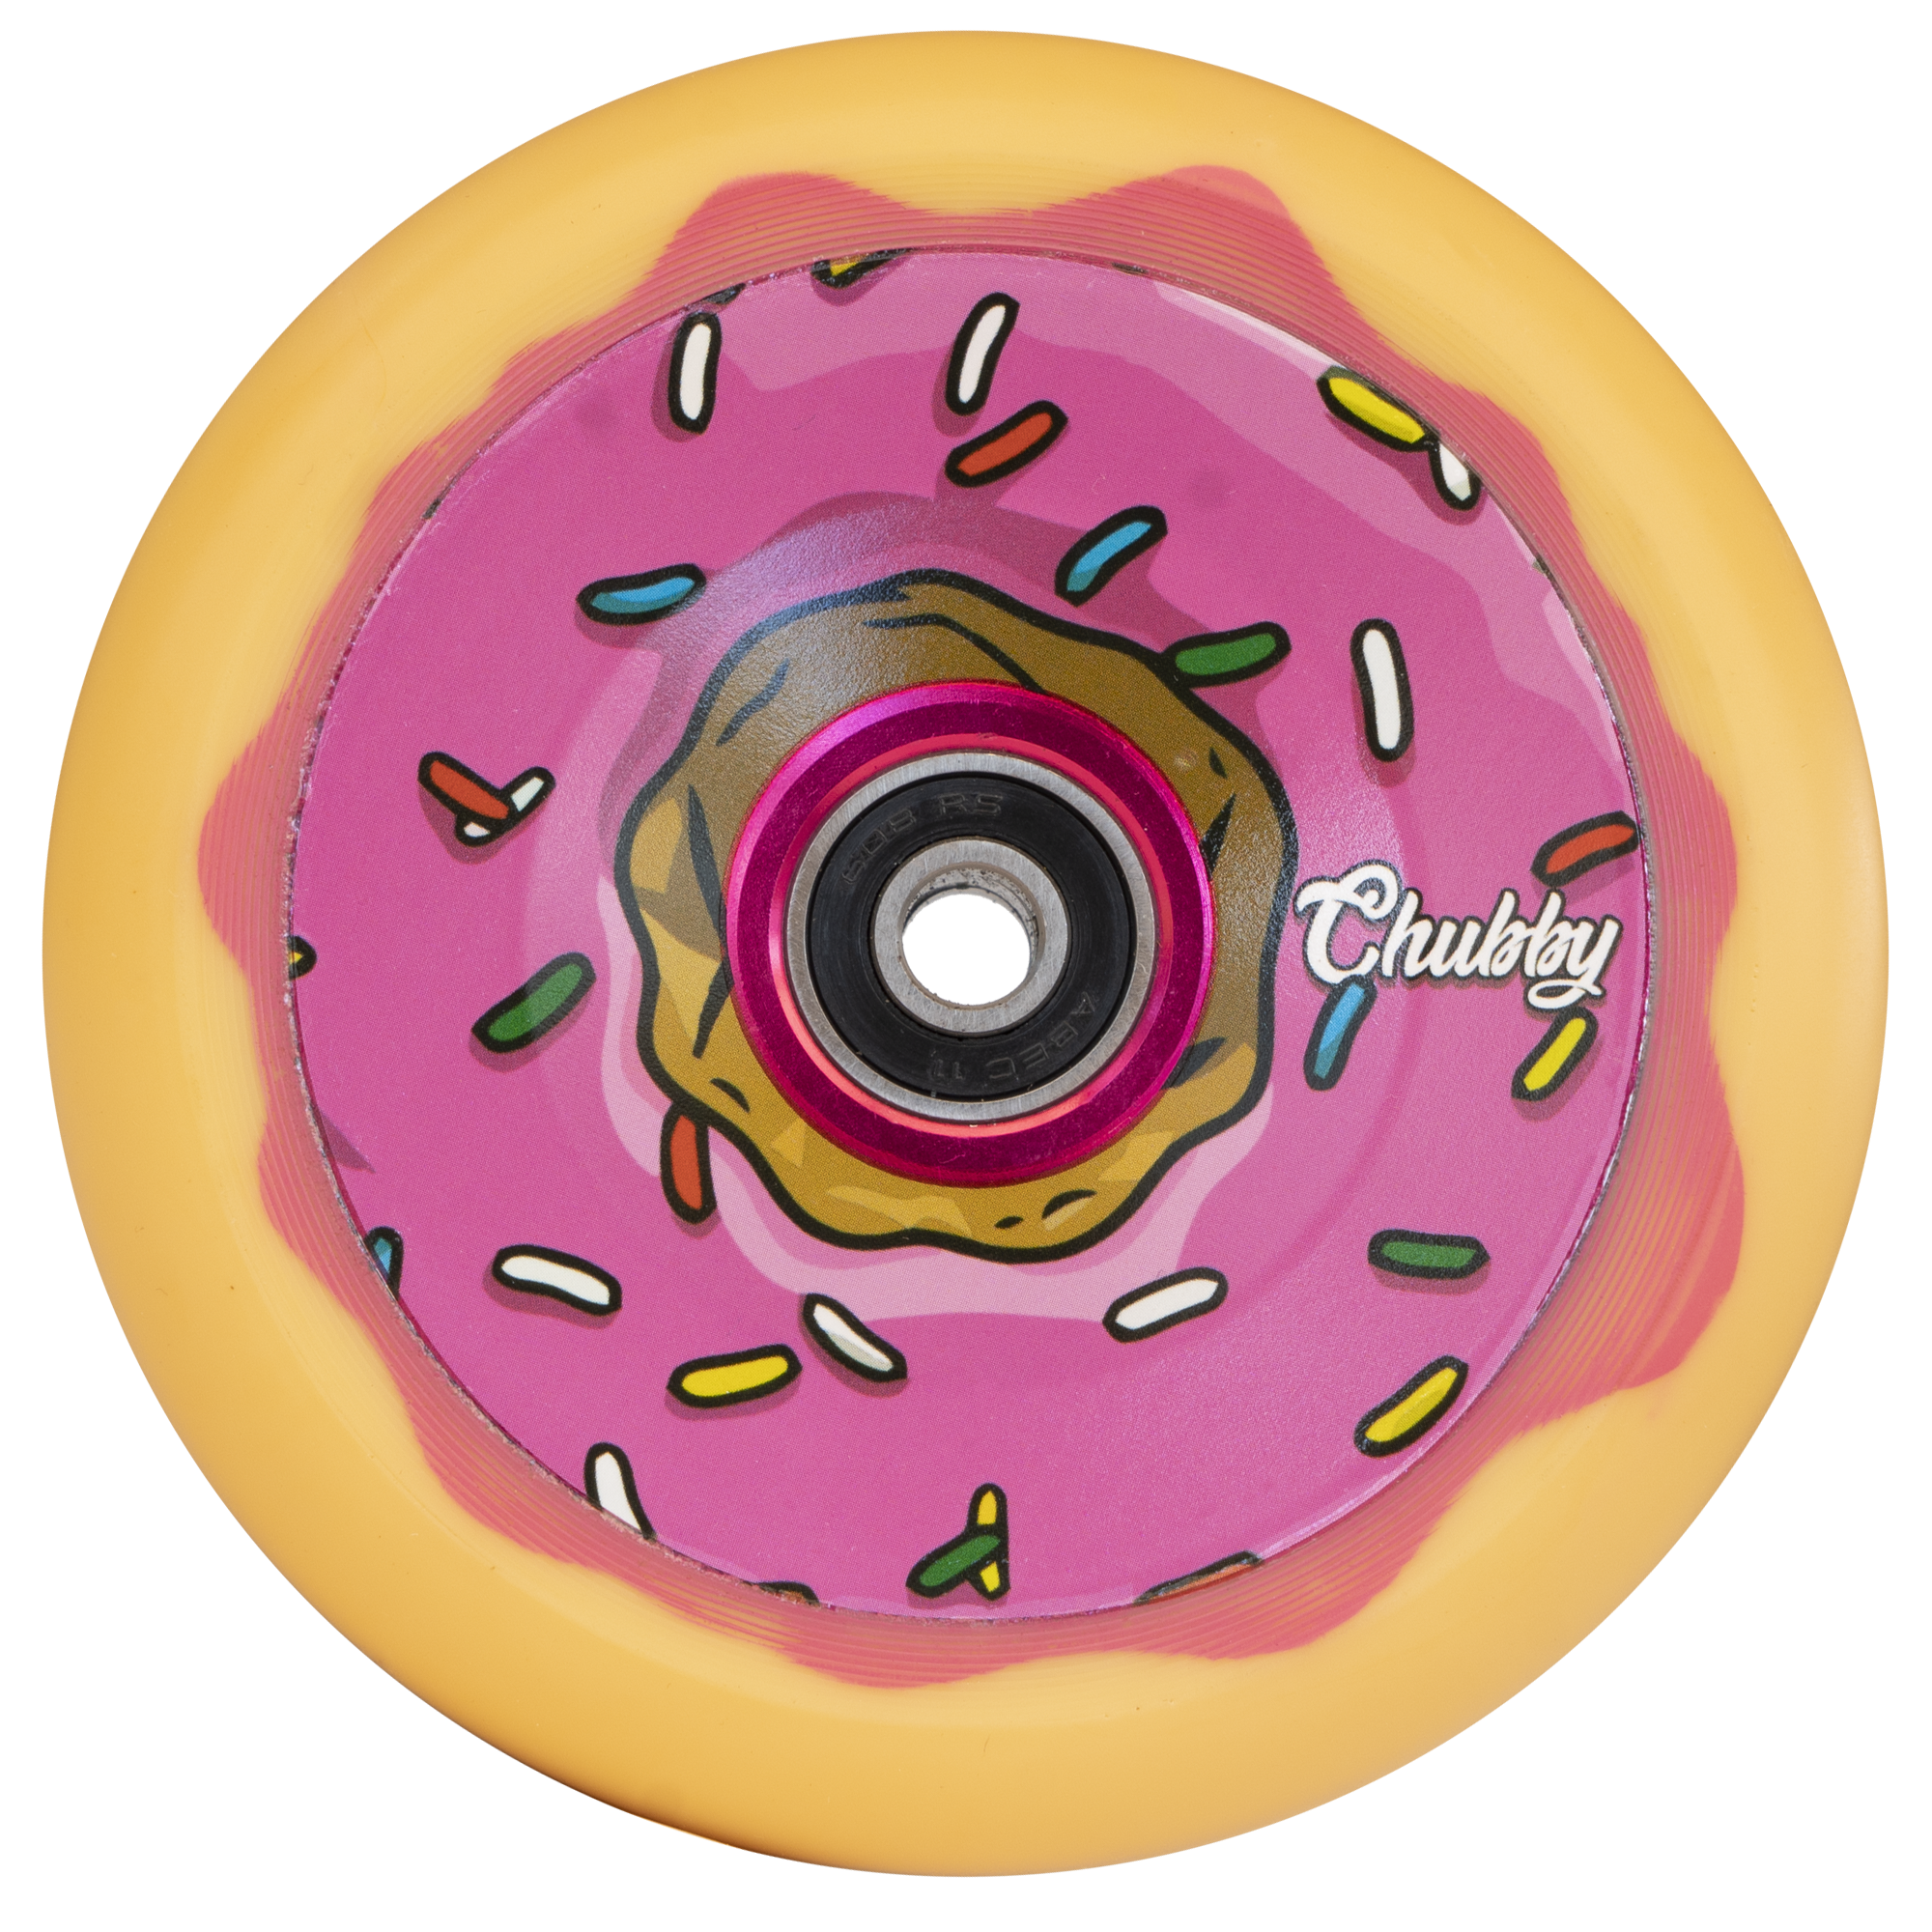 Chubby 110mm Dohnut Pink Wheel